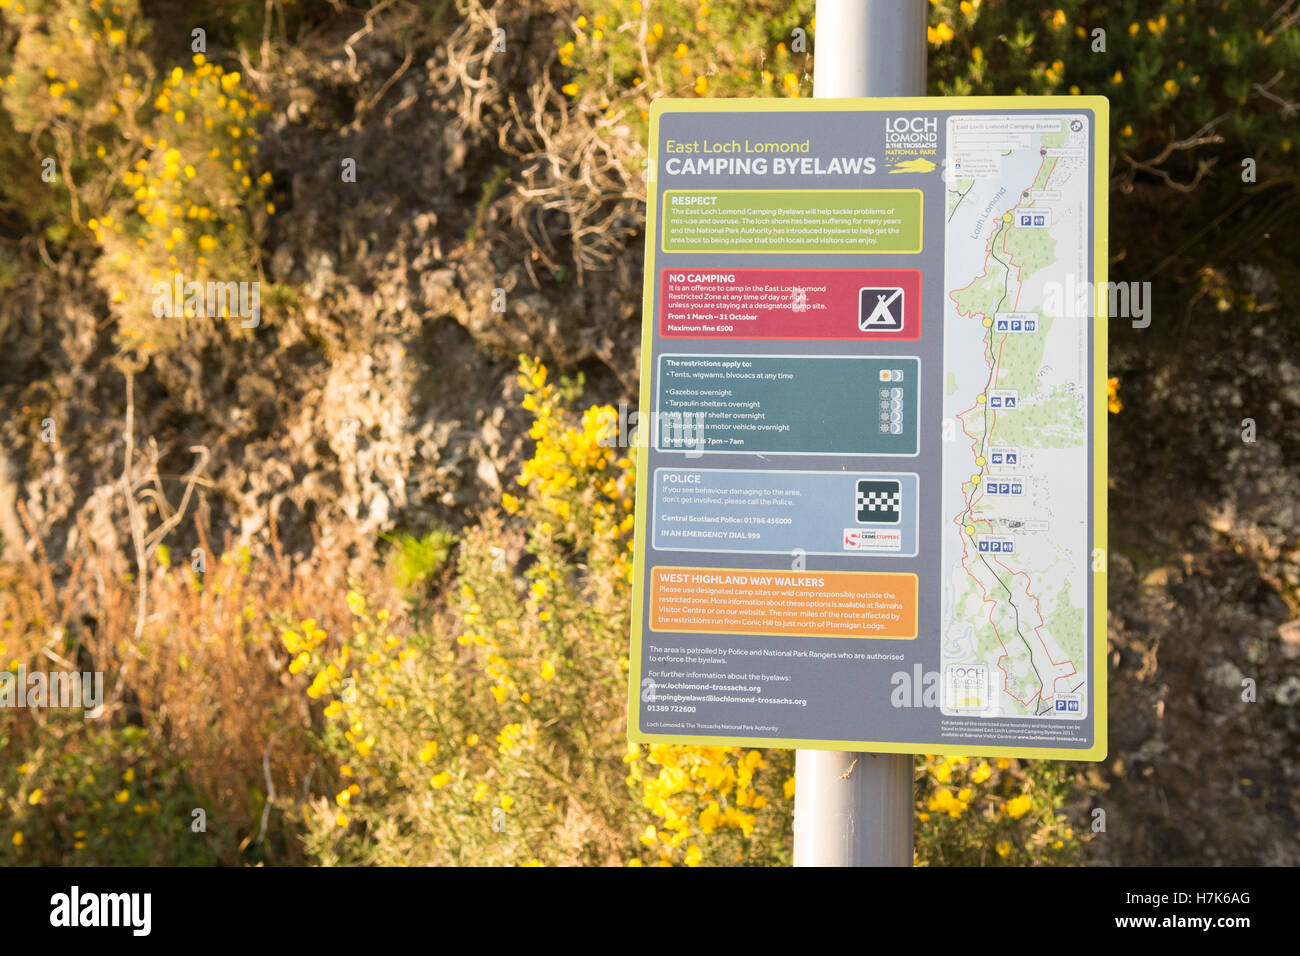 Loch Lomond est Camping Statuts informations inscription, Loch Lomond, Ecosse, UK, Europe, Banque D'Images